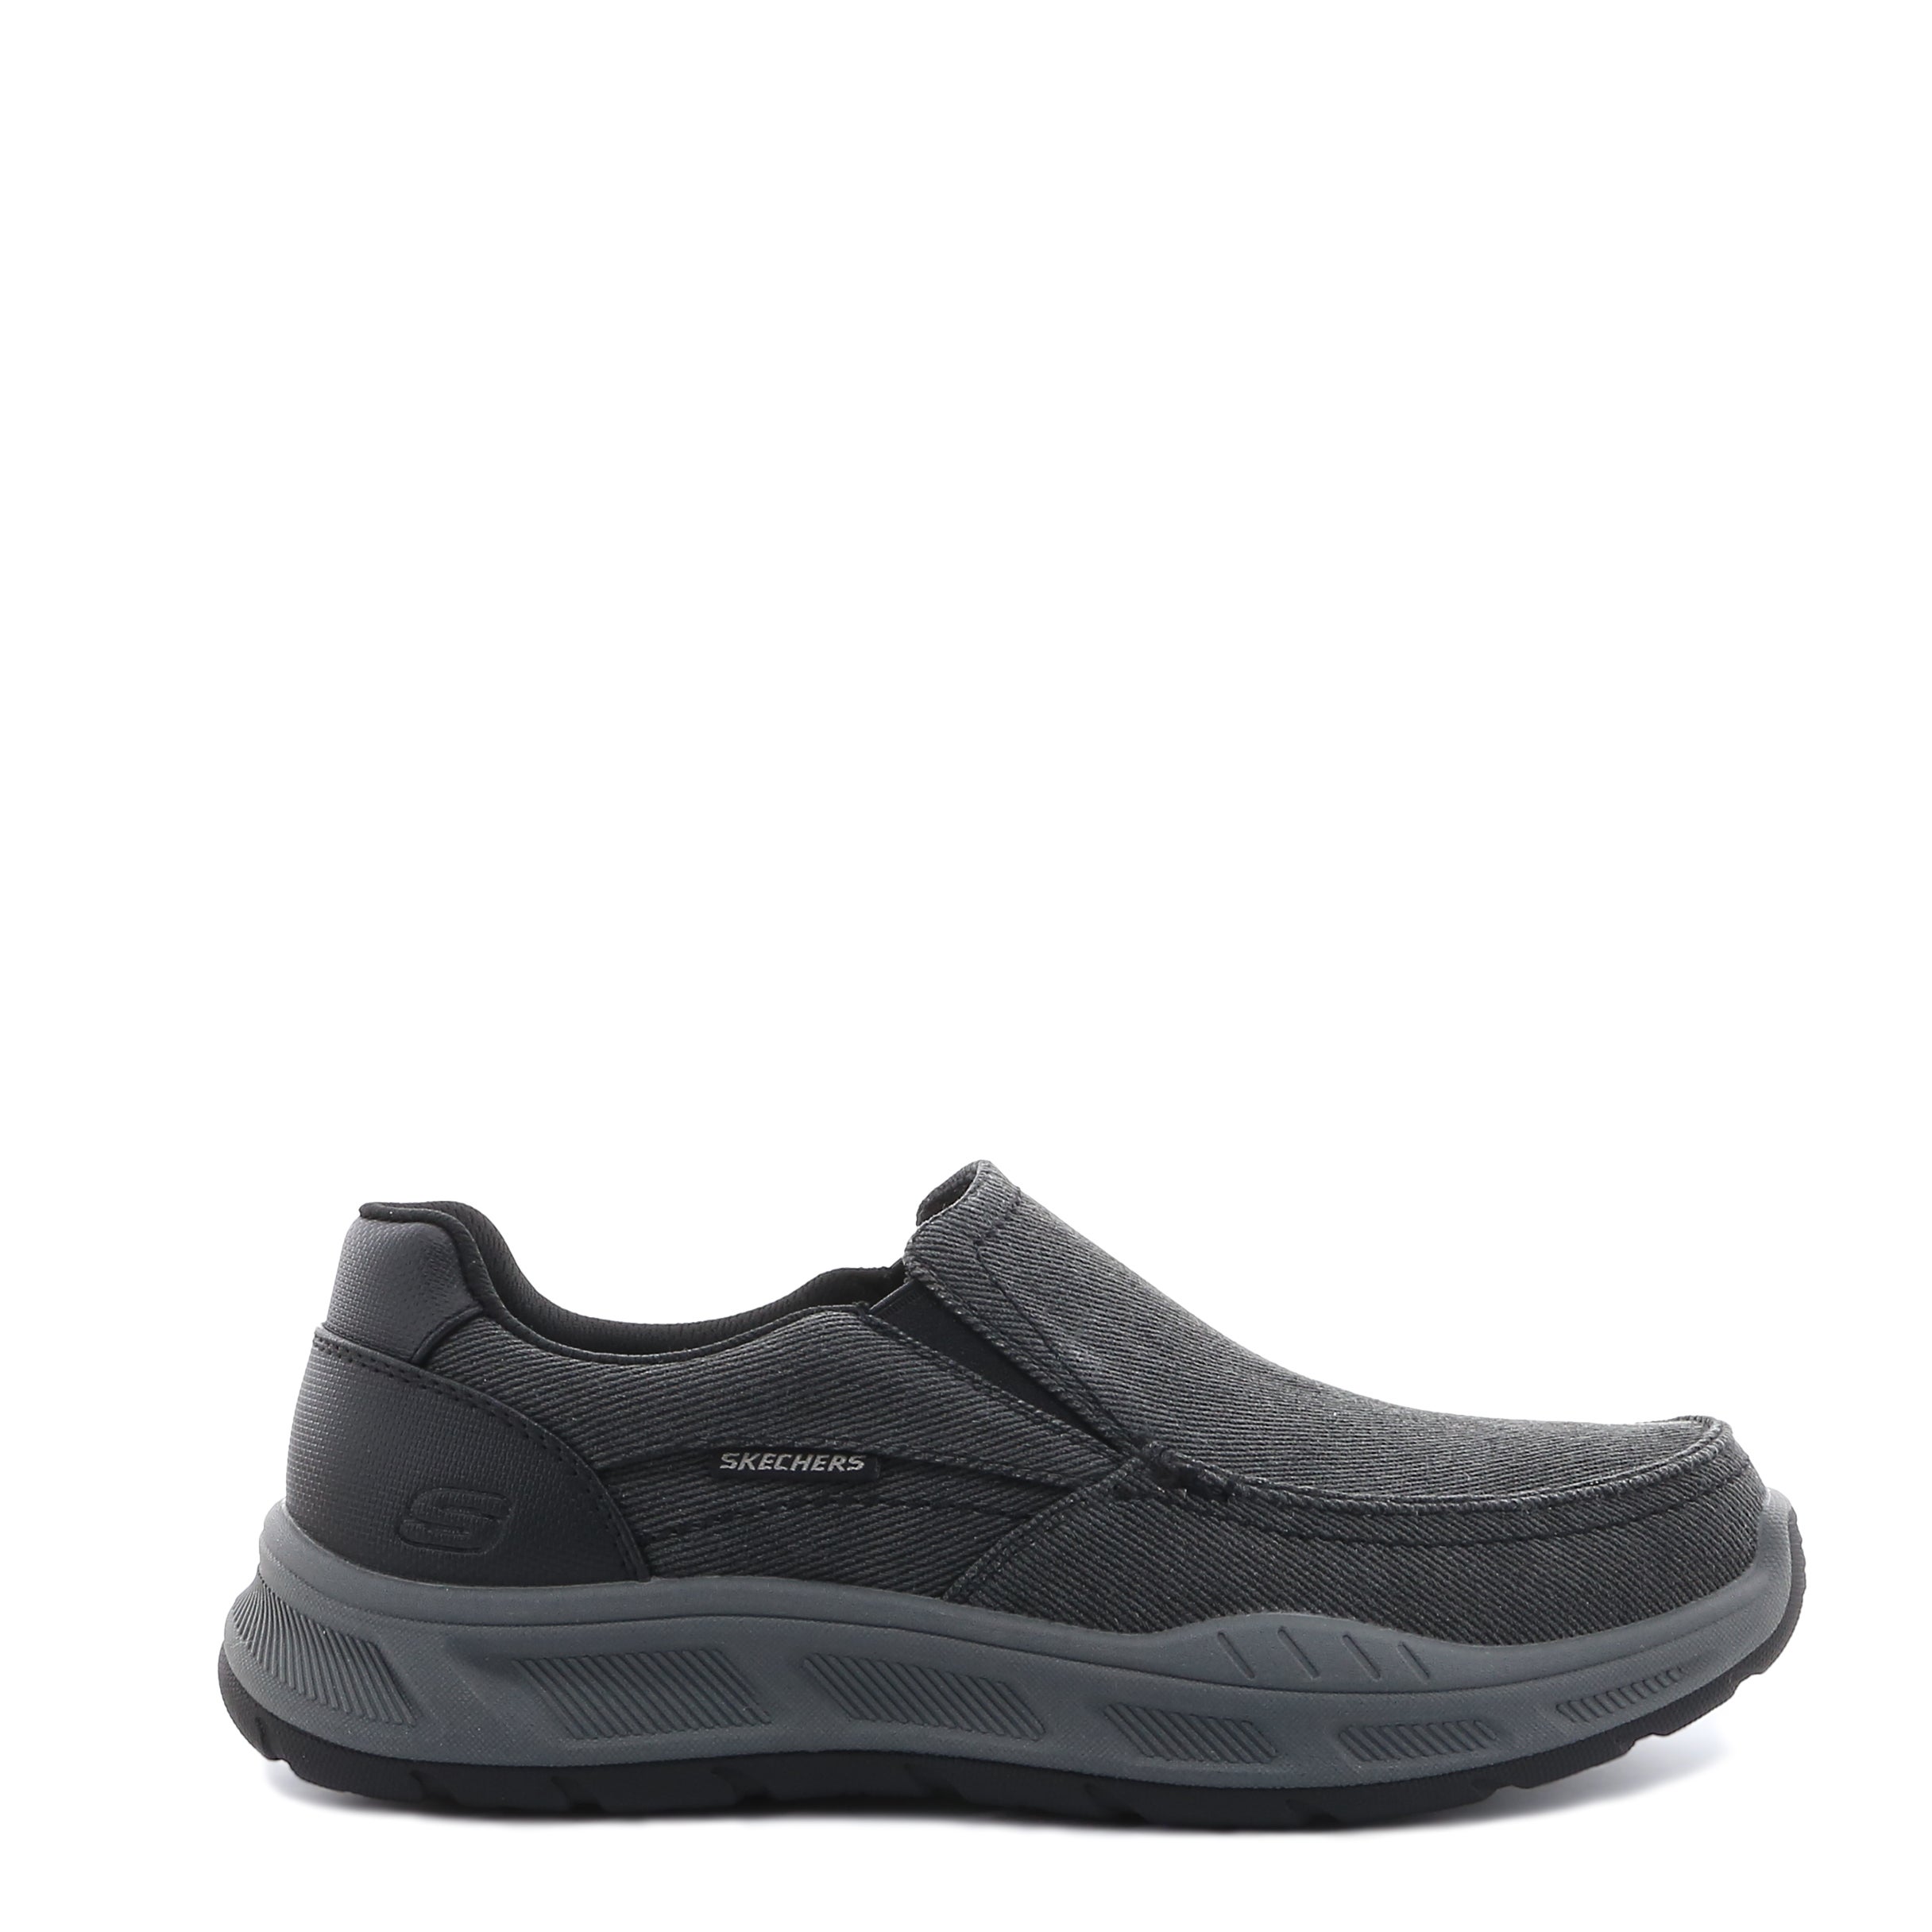 https://www.hannahs.co.nz/content/products/cohagen-vierra-skechers-shoes-black-image02-cohagen-vierra-skechers-shoes.jpg?width=2500